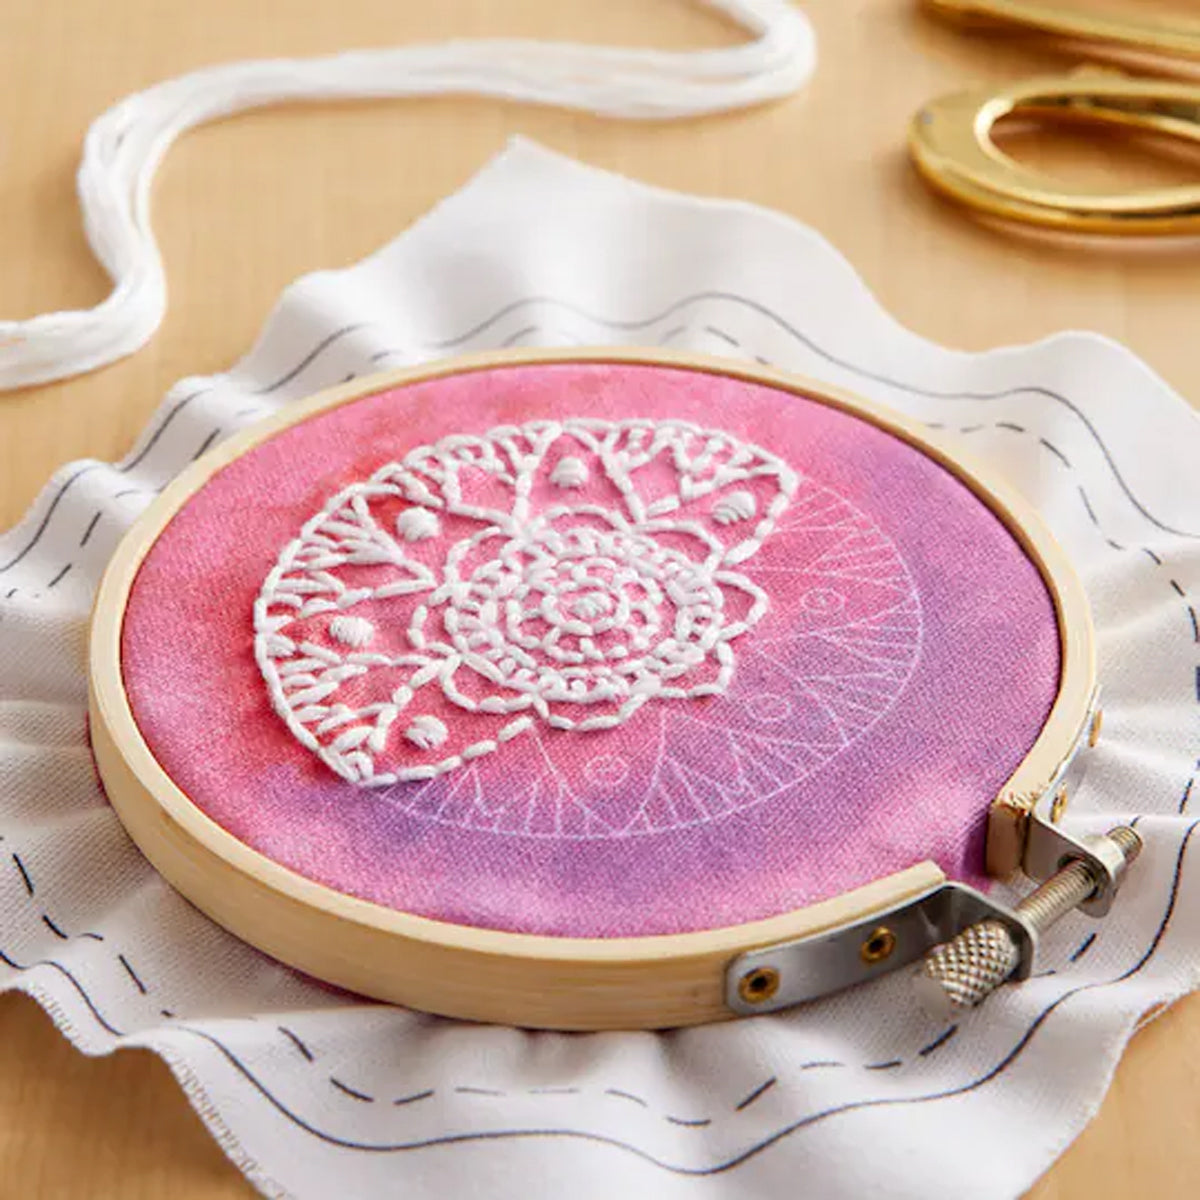 Tambour Embroidery Kit 5 for Beginner Mandala Set for Tambour